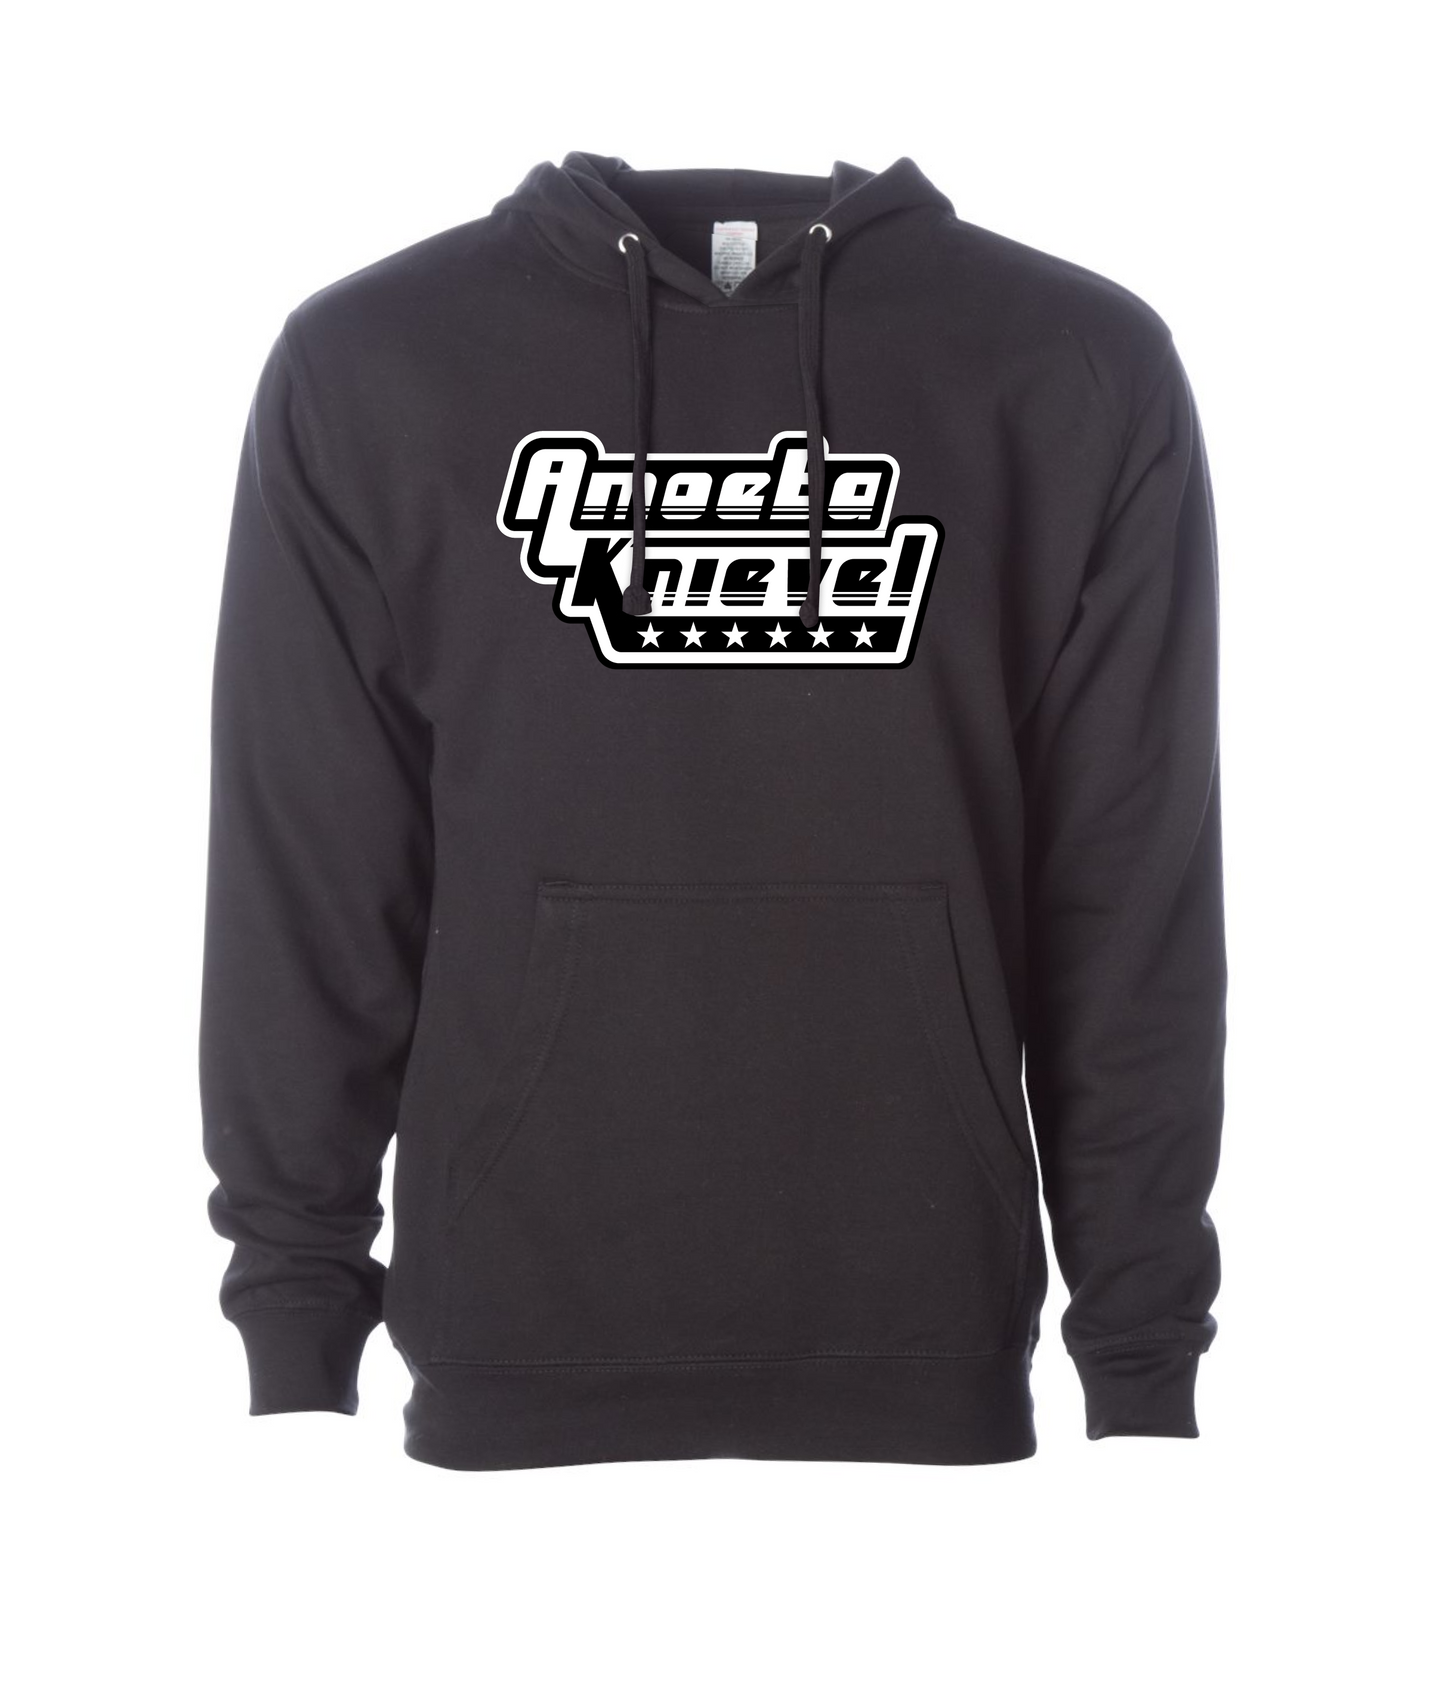 Amoeba Knievel Merch 'N Stuff - Logo - Black Hoodie